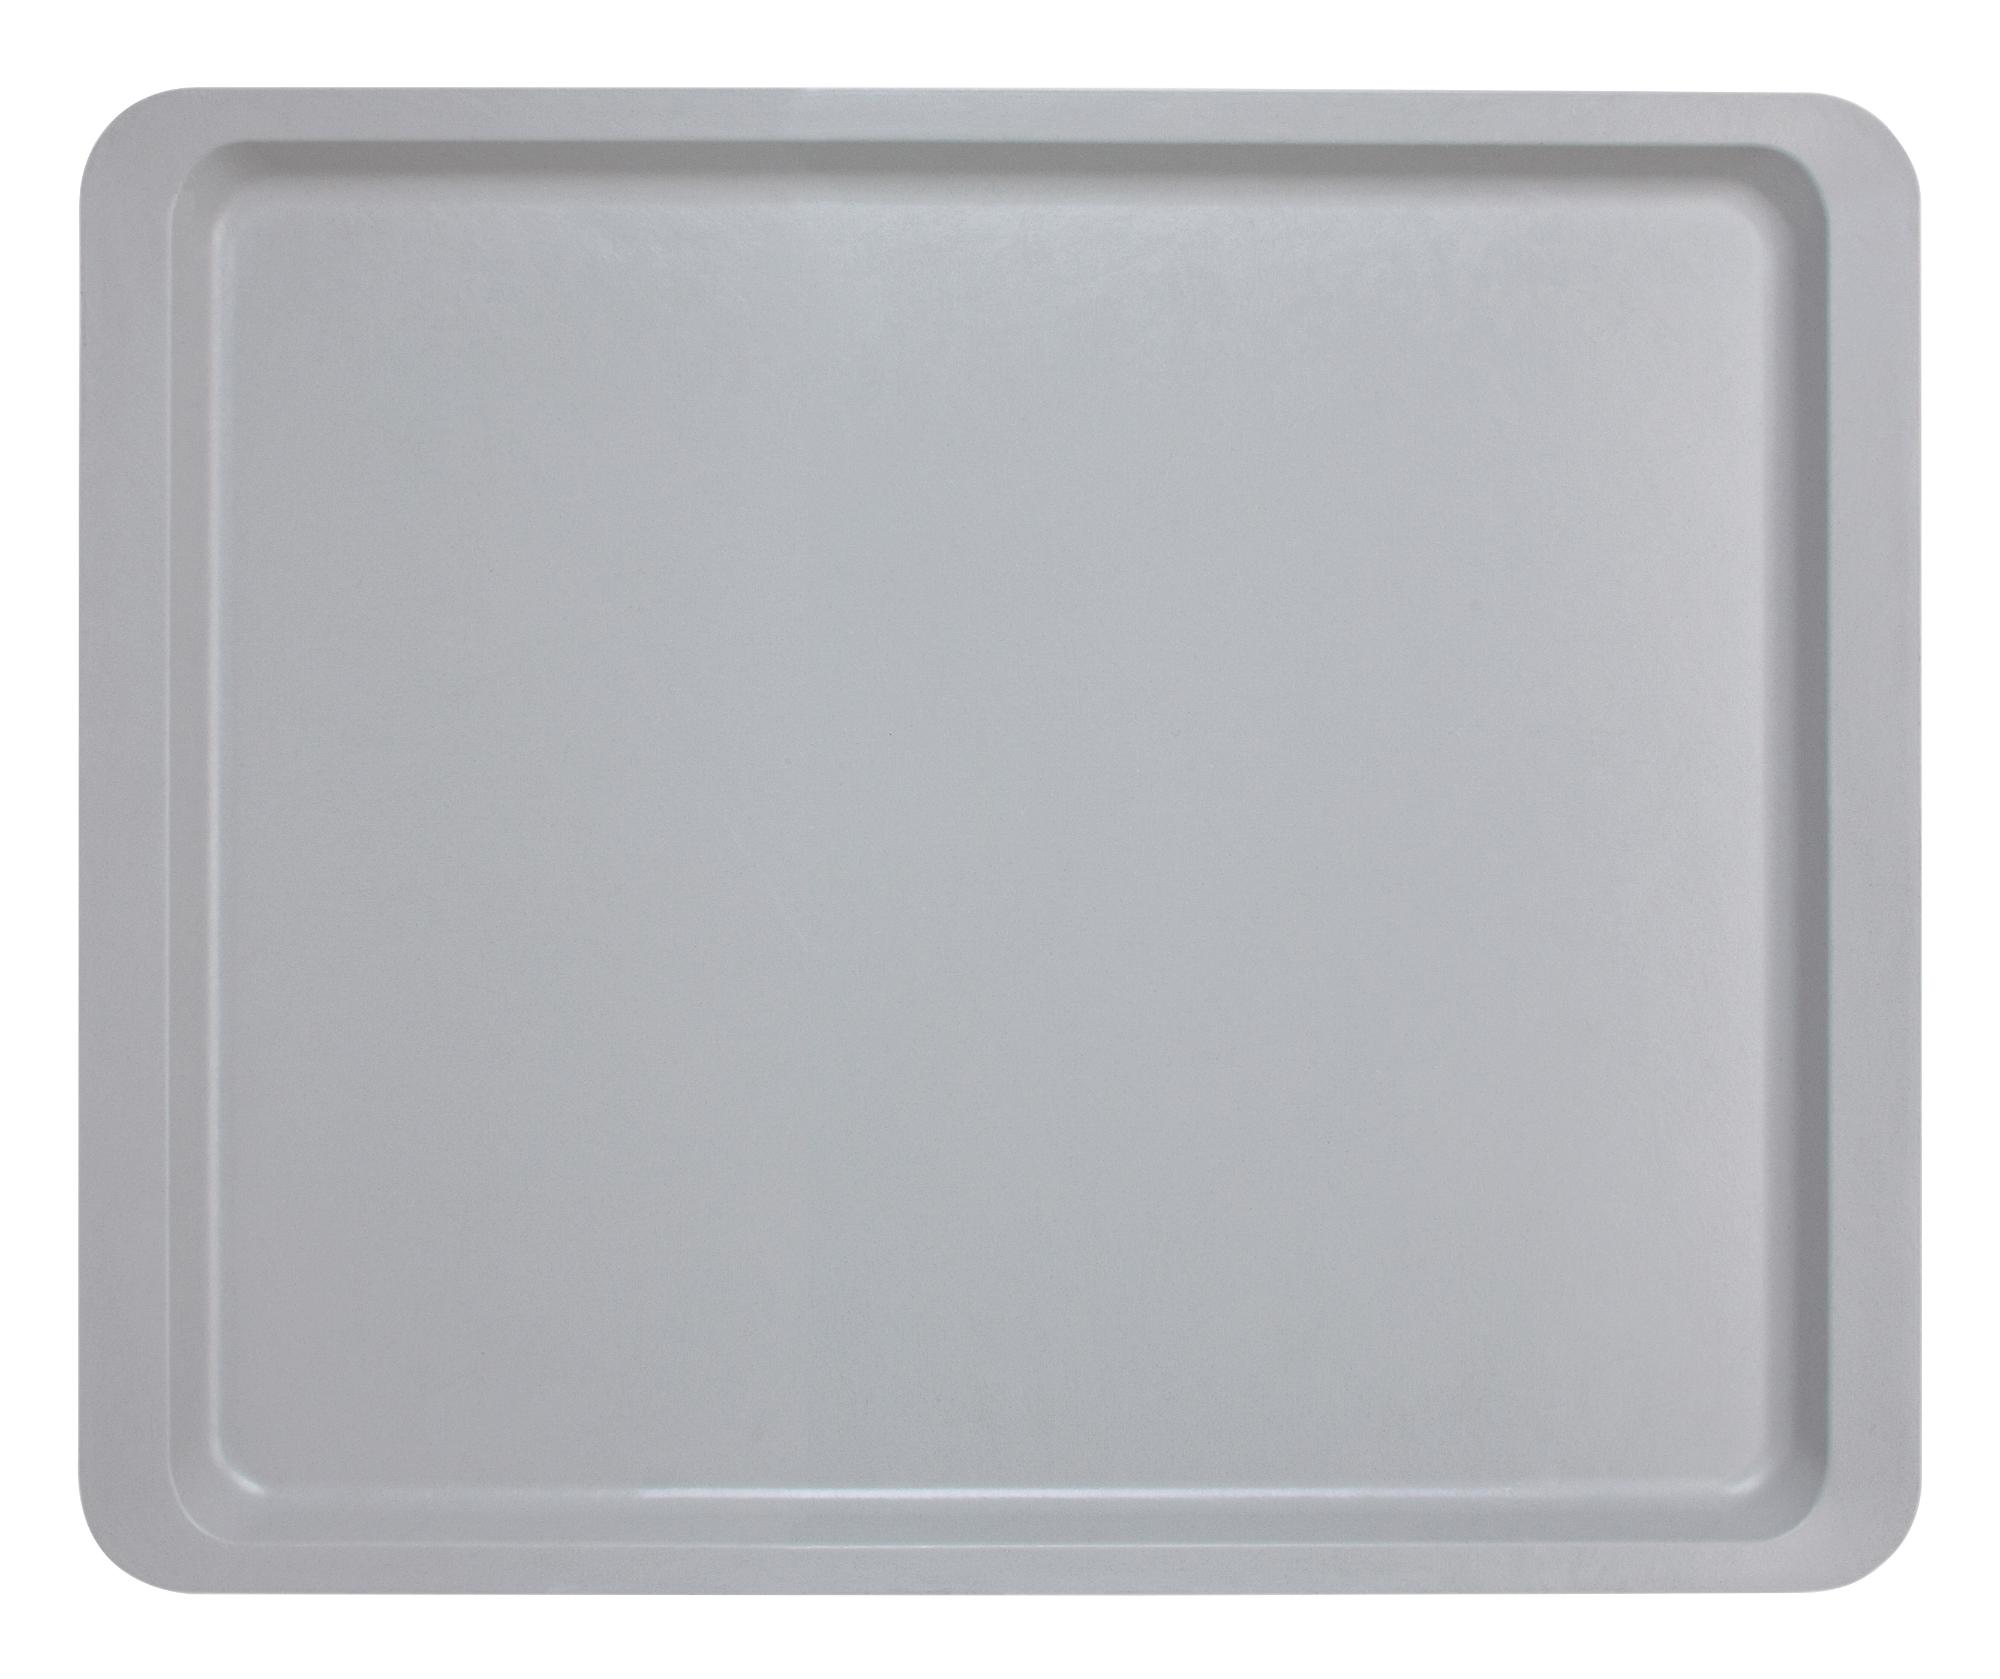 Versa polyester tray with high rim, granite, 325x530mm